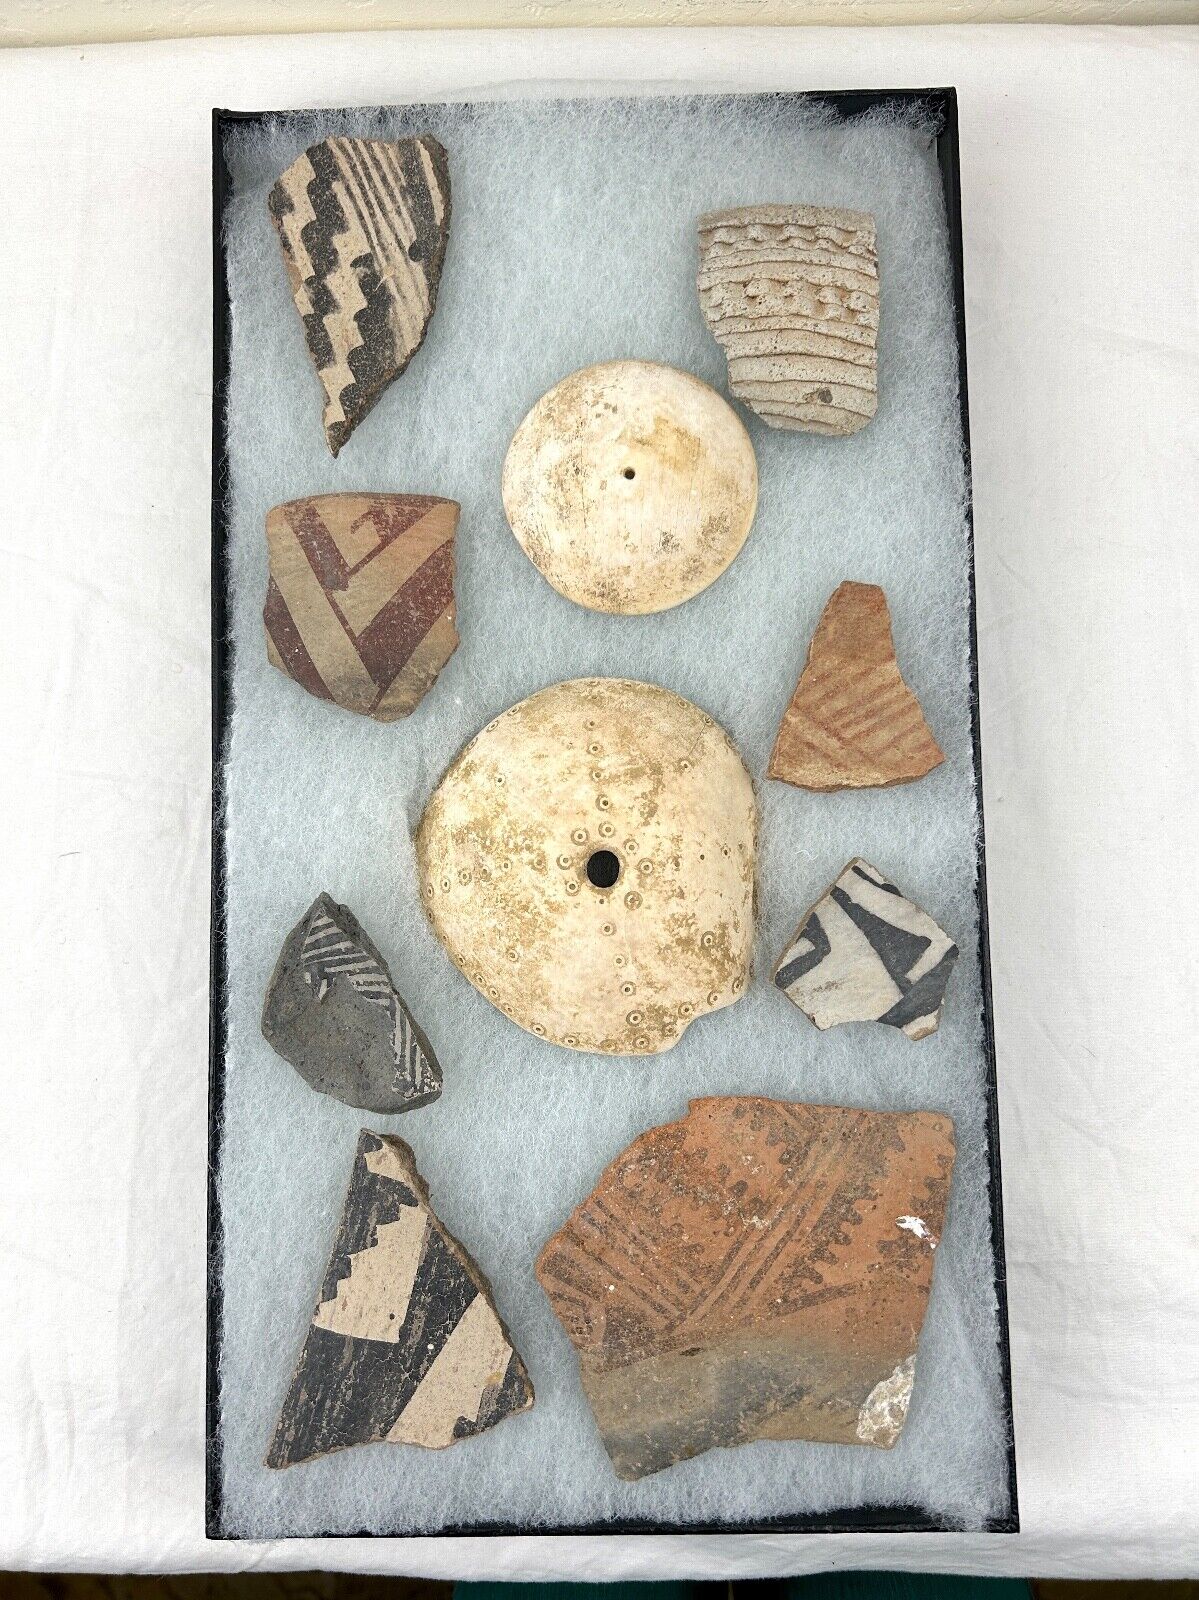 Ancient Anasazi Pottery and Shells from Northern Arizona